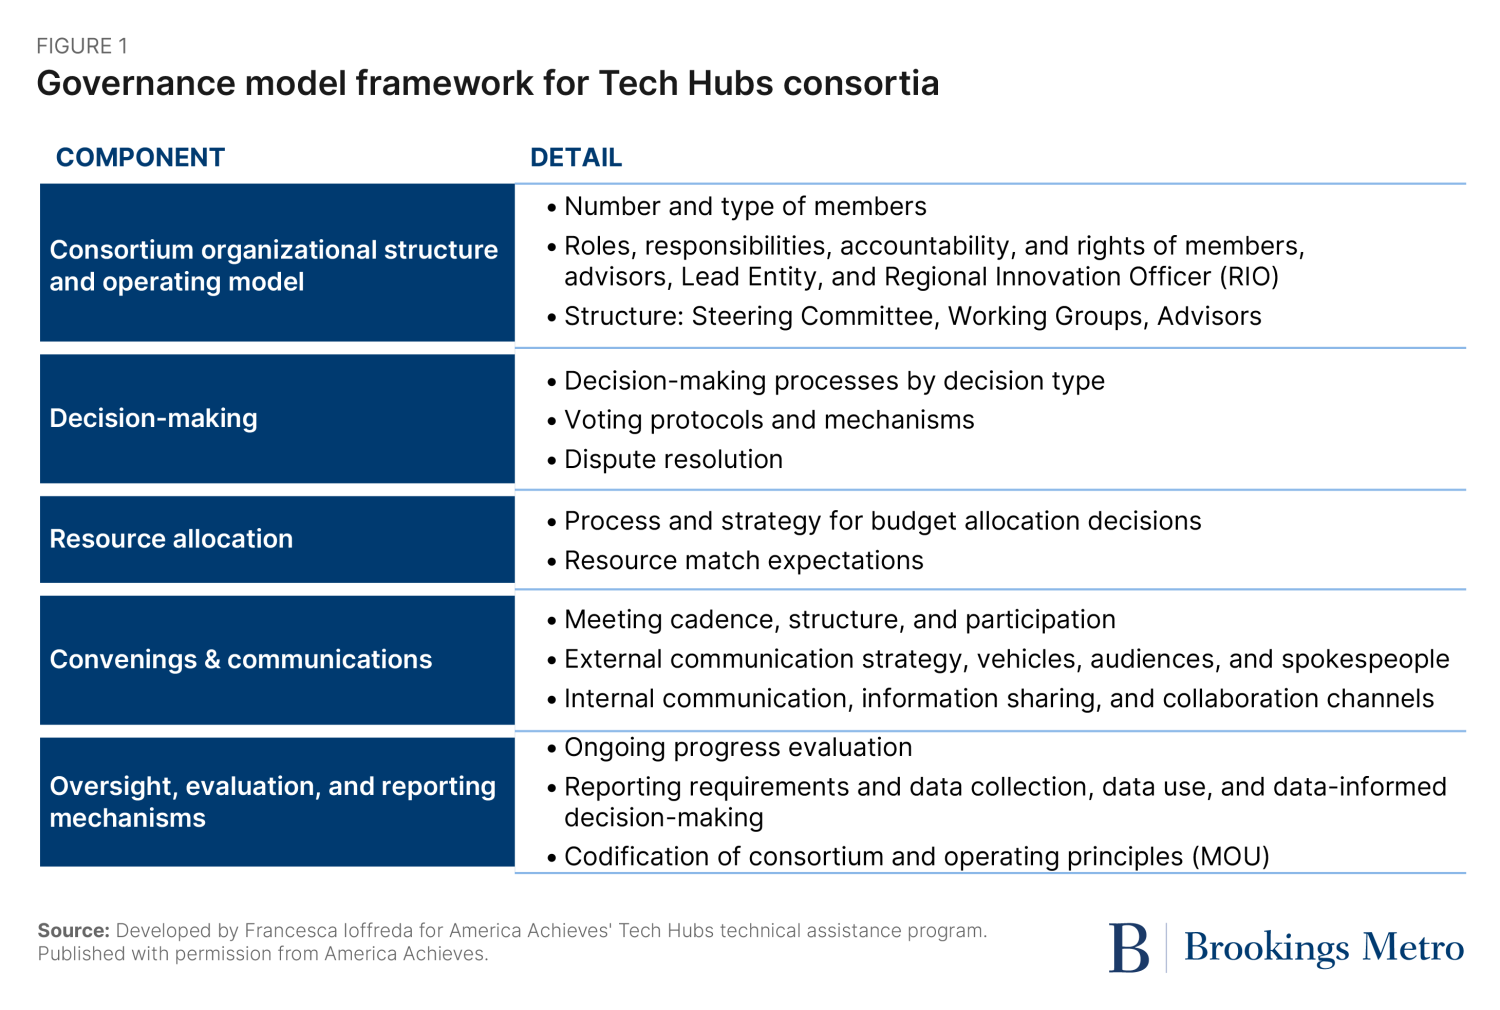 Figure 1. Governance model framework for Tech Hubs consortia